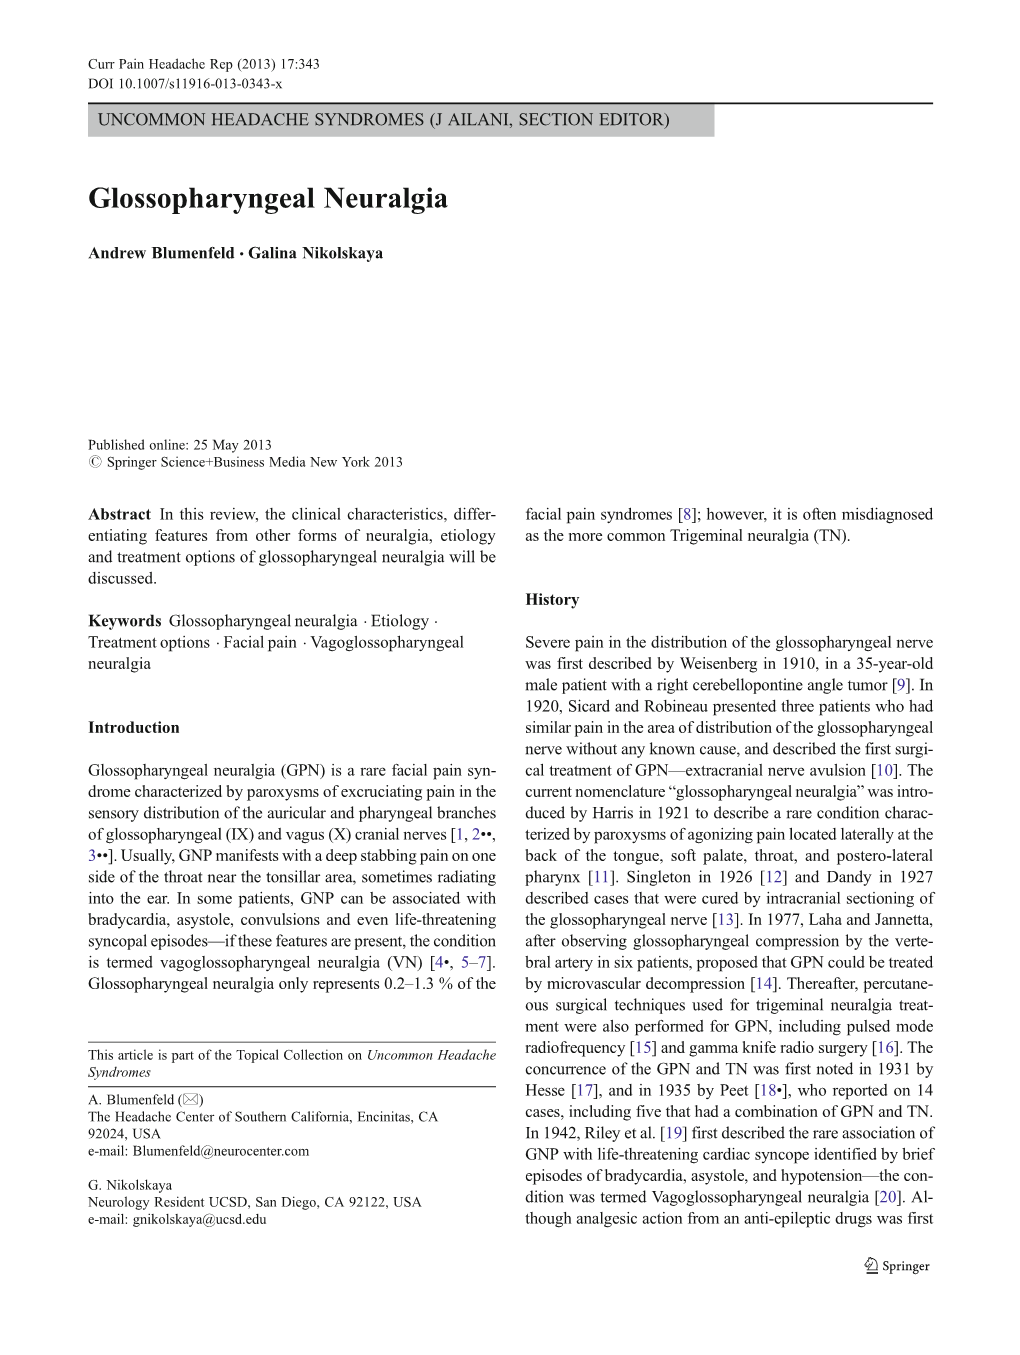 Glossopharyngeal Neuralgia